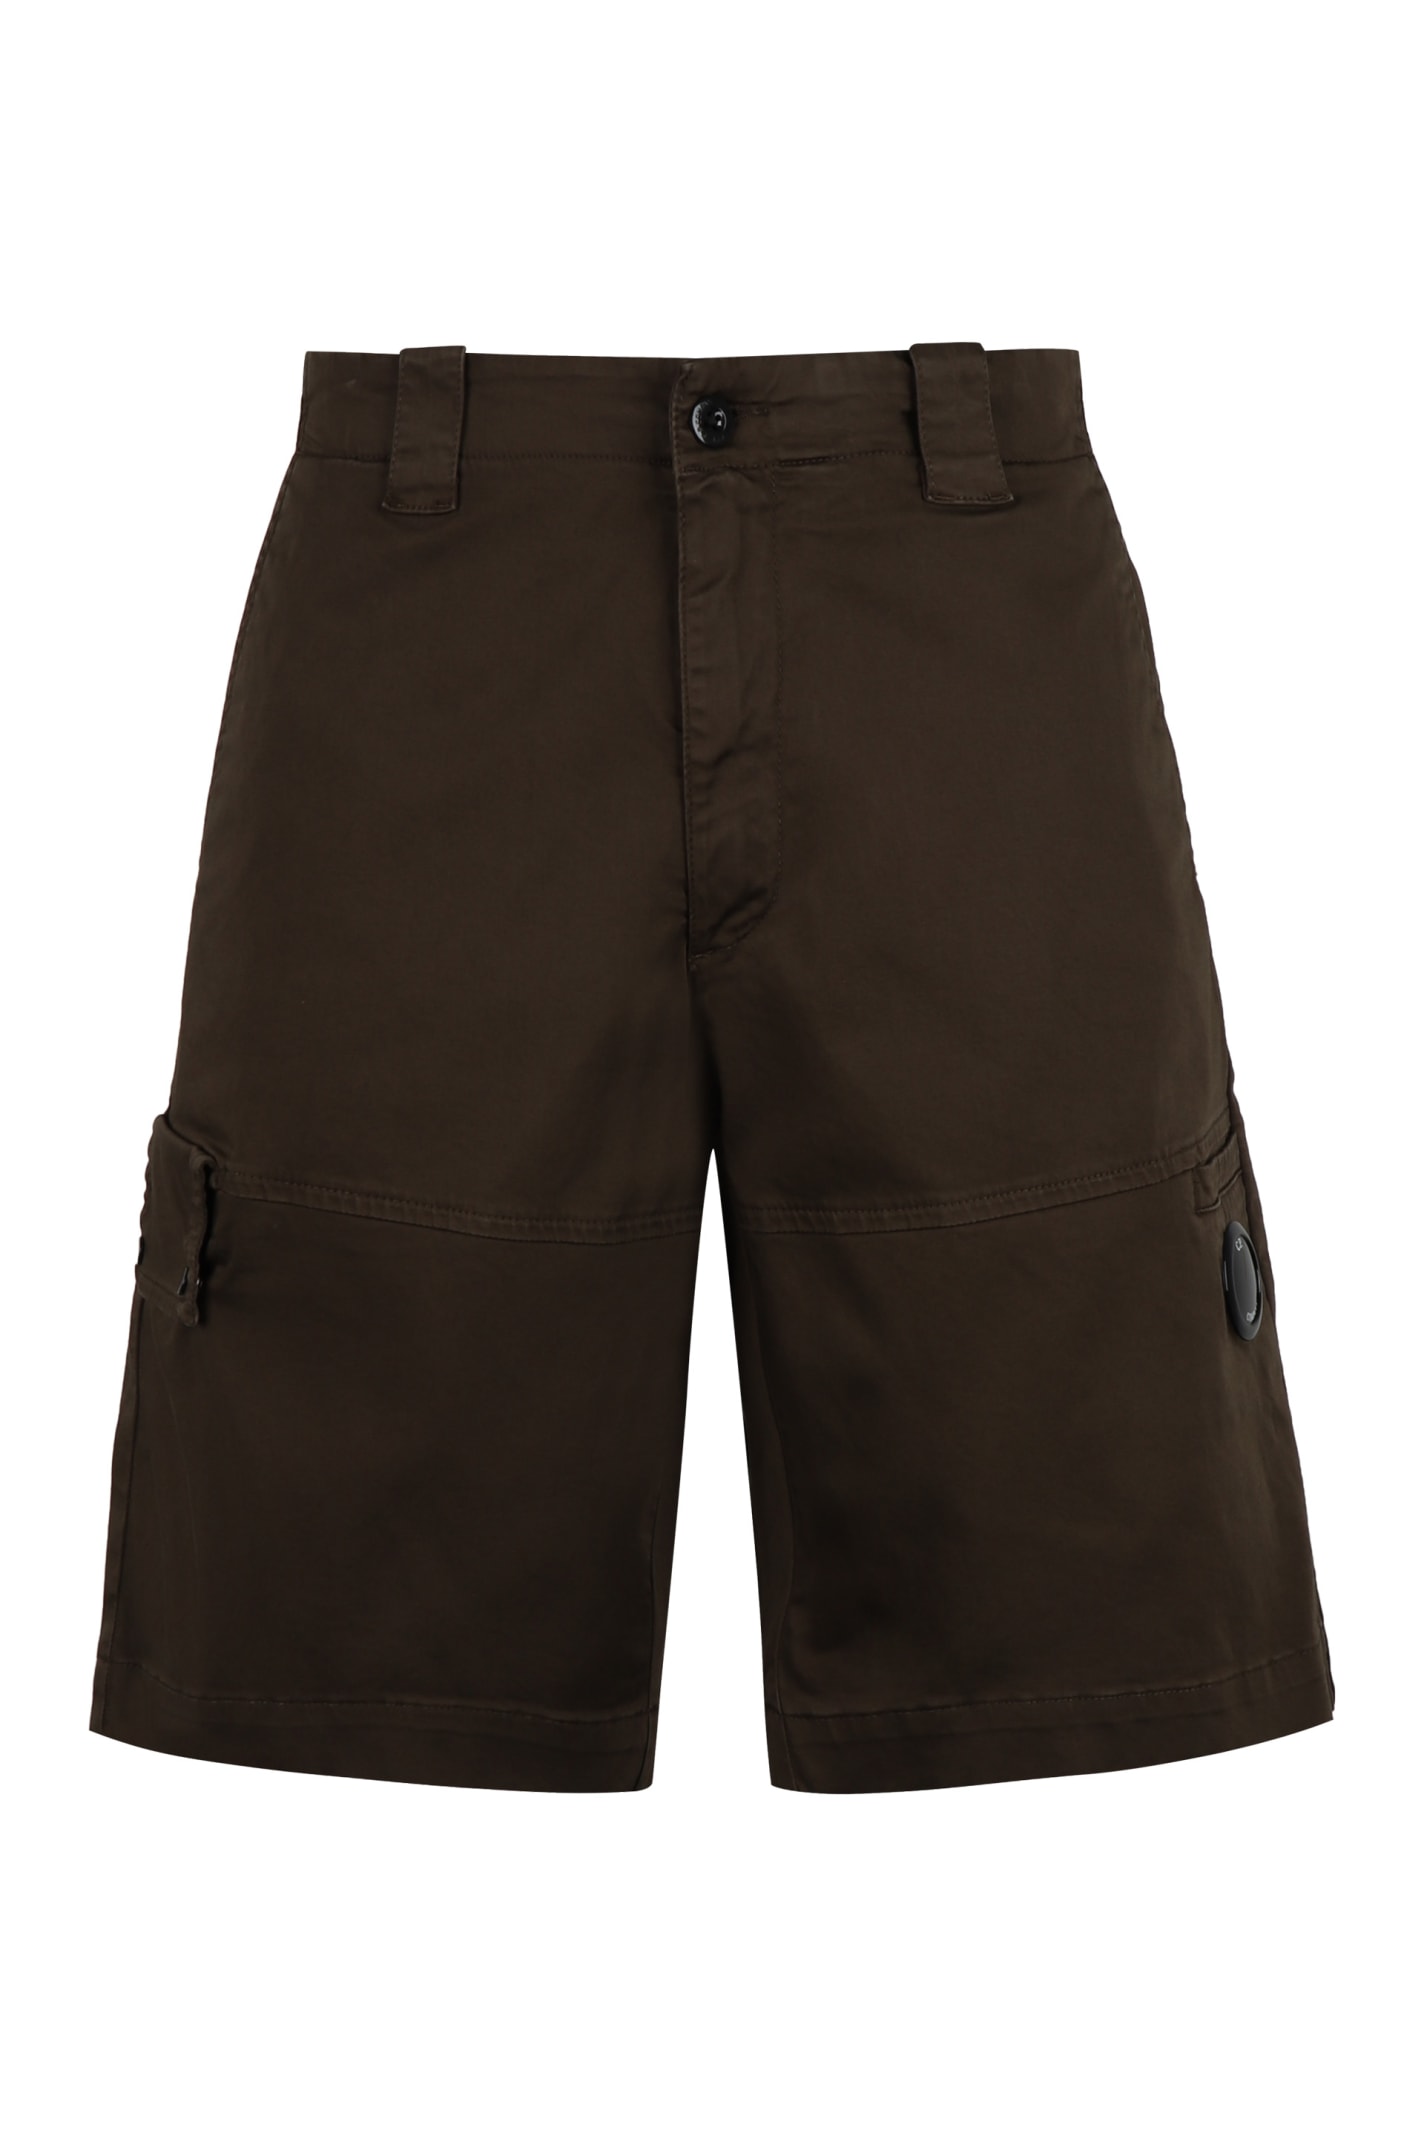 C.P. Company Cotton Bermuda Shorts